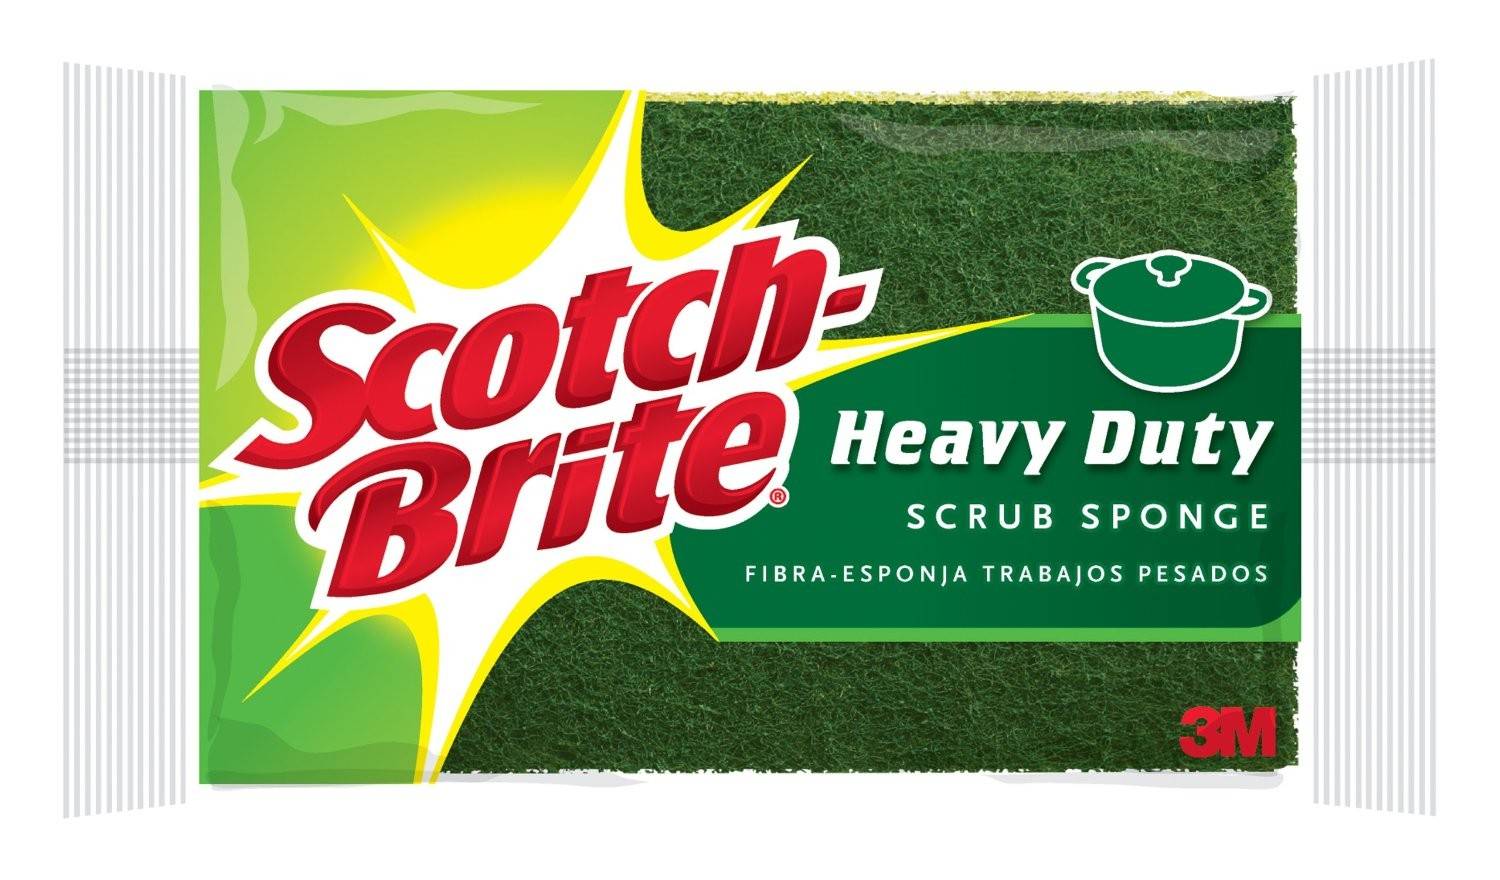 Scotch-Brite Scrub Sponge Heavy Duty (1 ct)